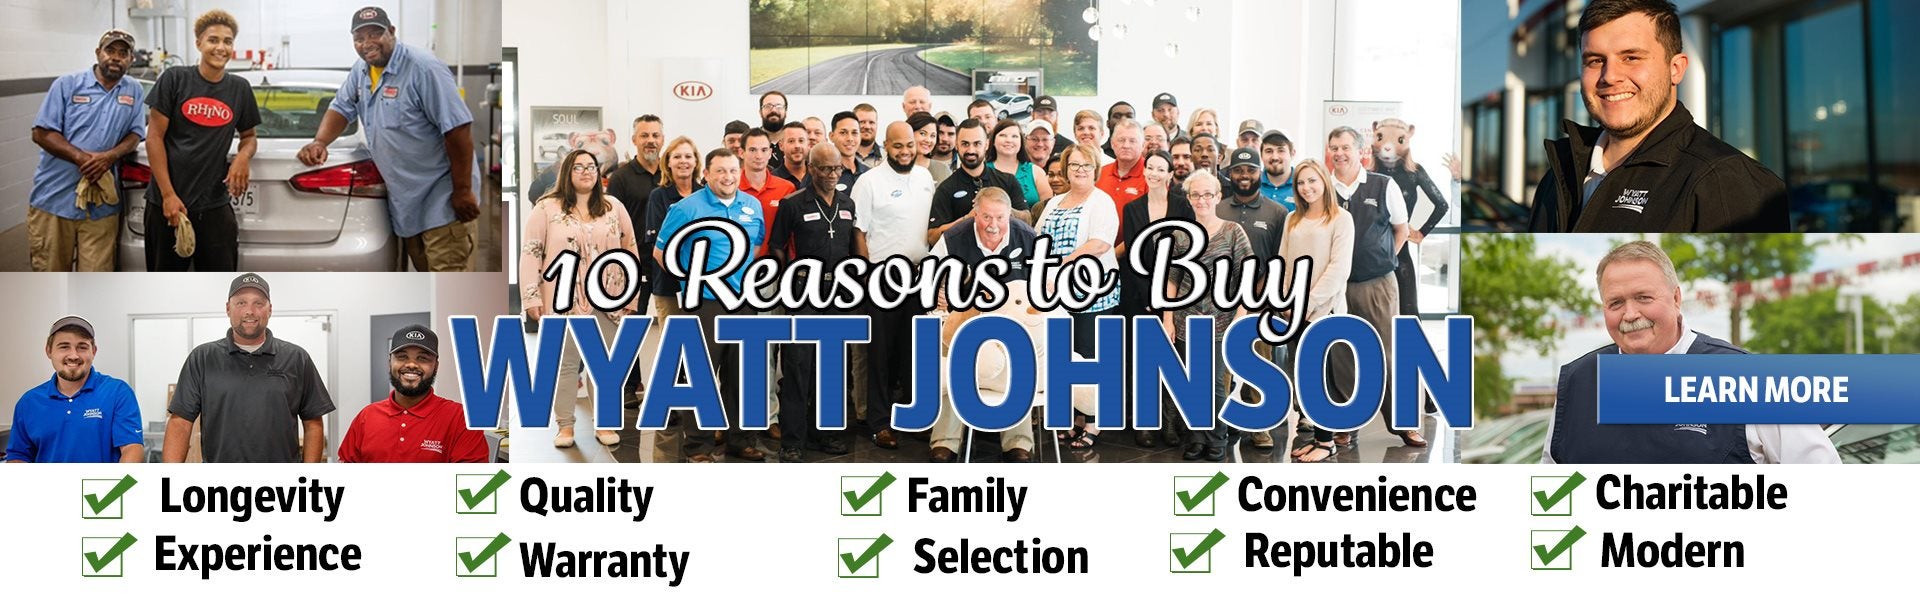 10 Reasons to Buy Wyatt Johnson